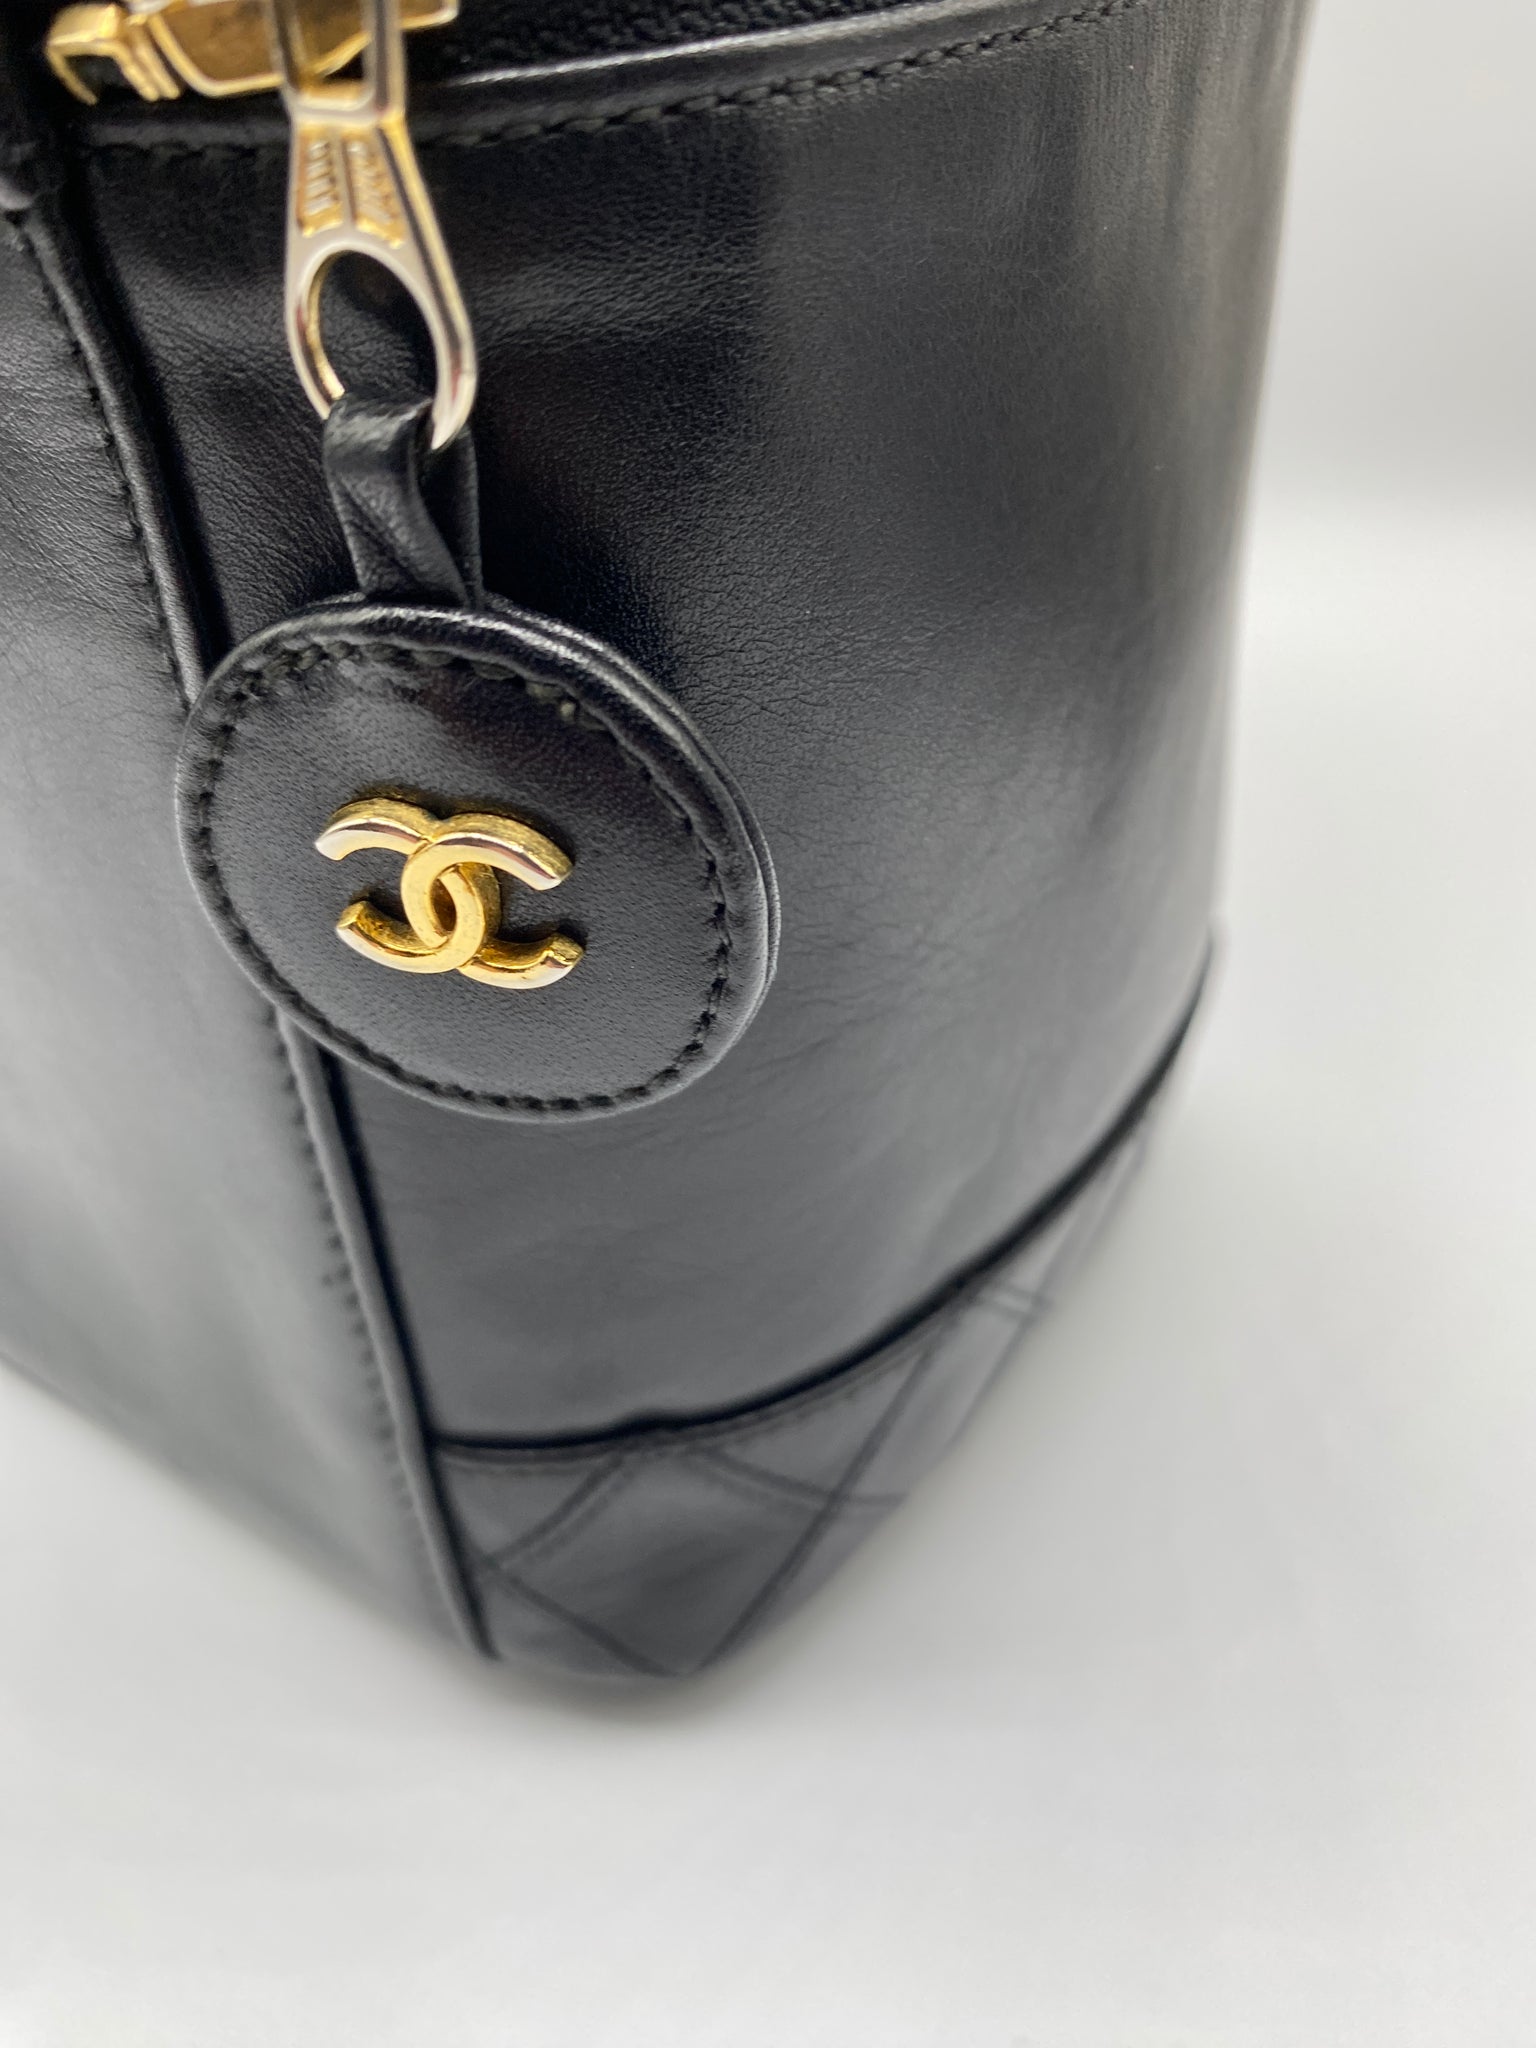 Chanel Black Lambskin Bag - 608 For Sale on 1stDibs